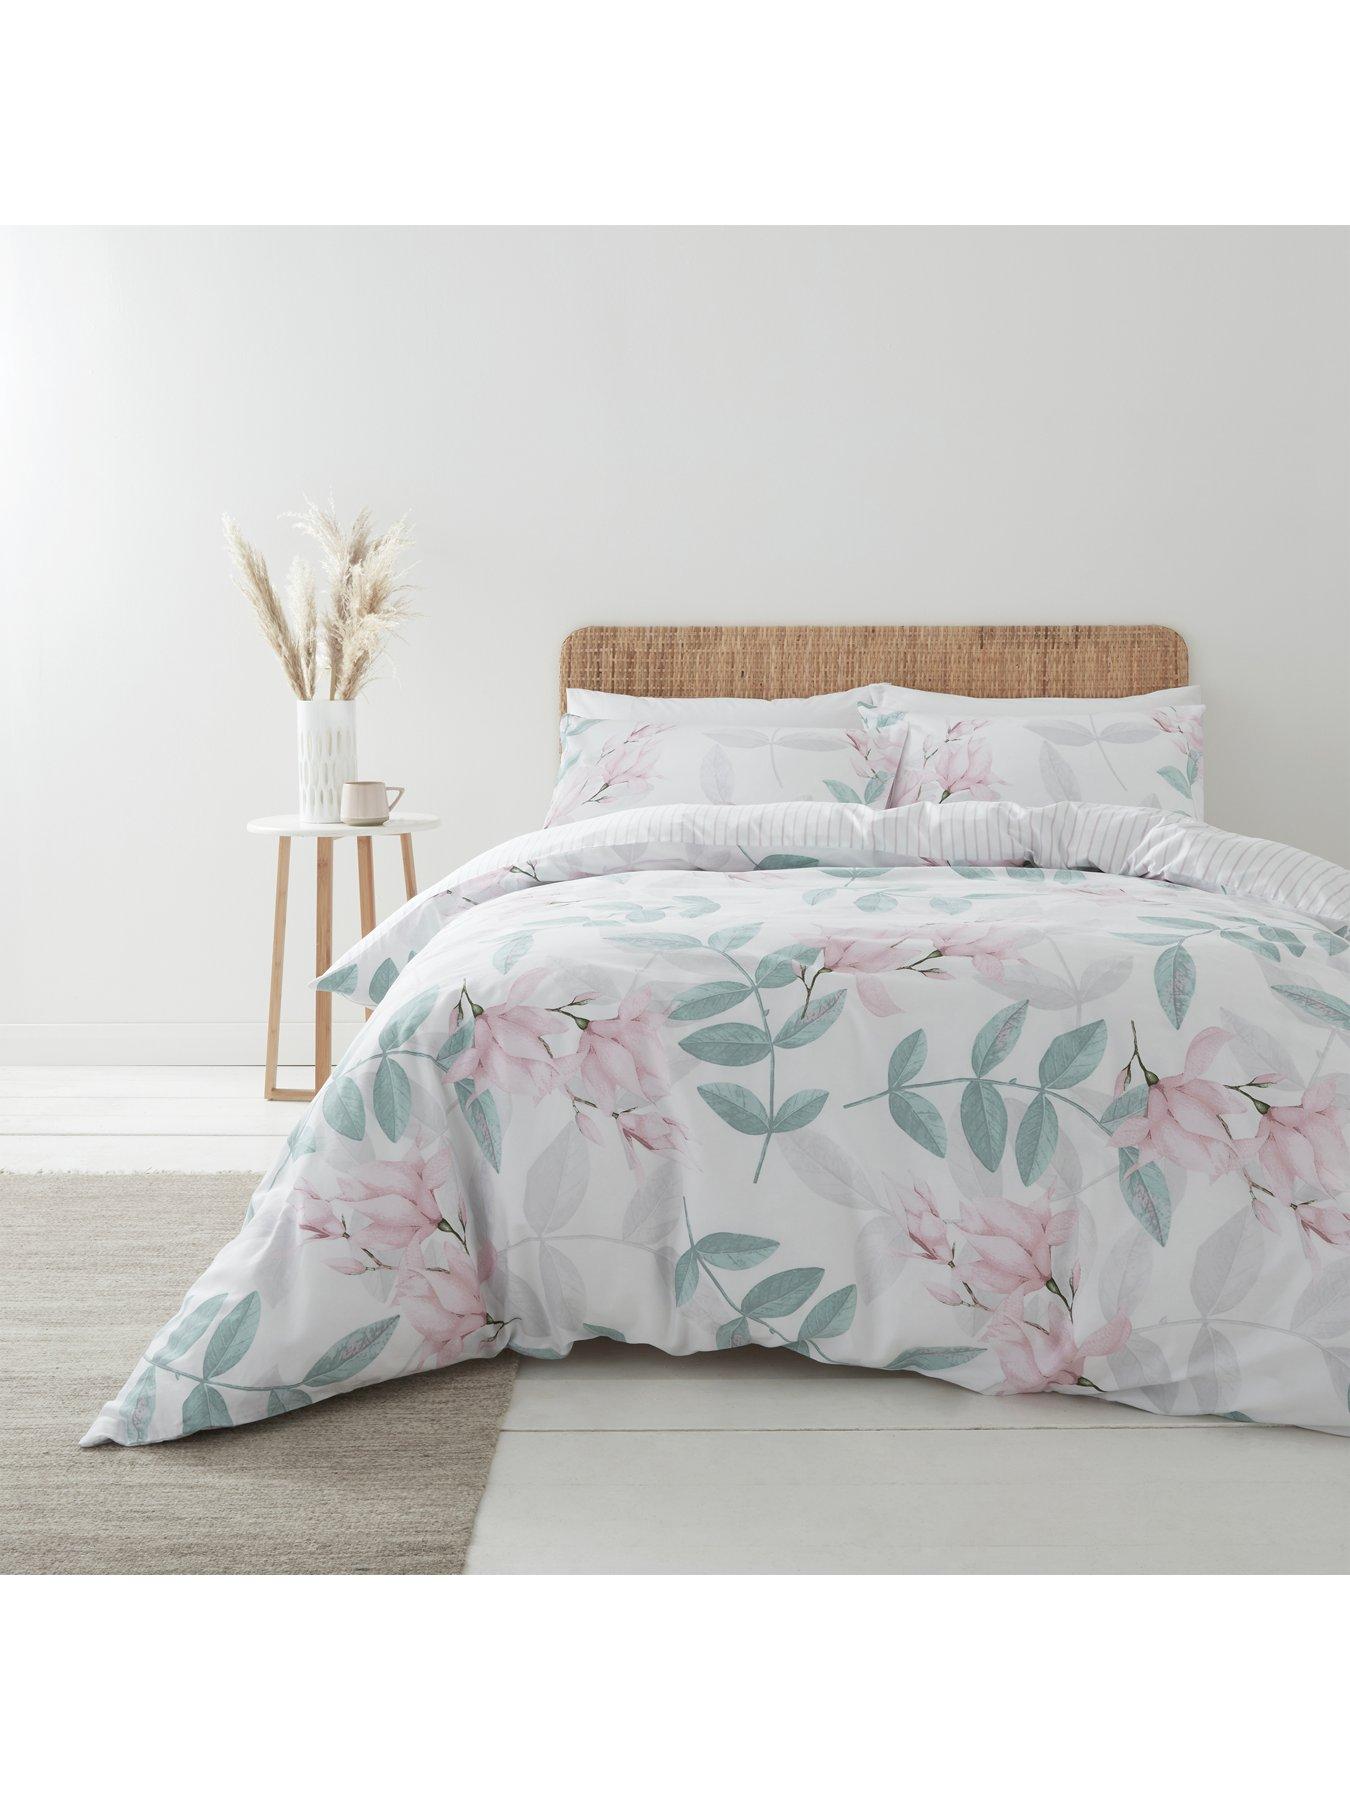 Details about   Cotton sheets set double together on below floral pillowcases show original title 